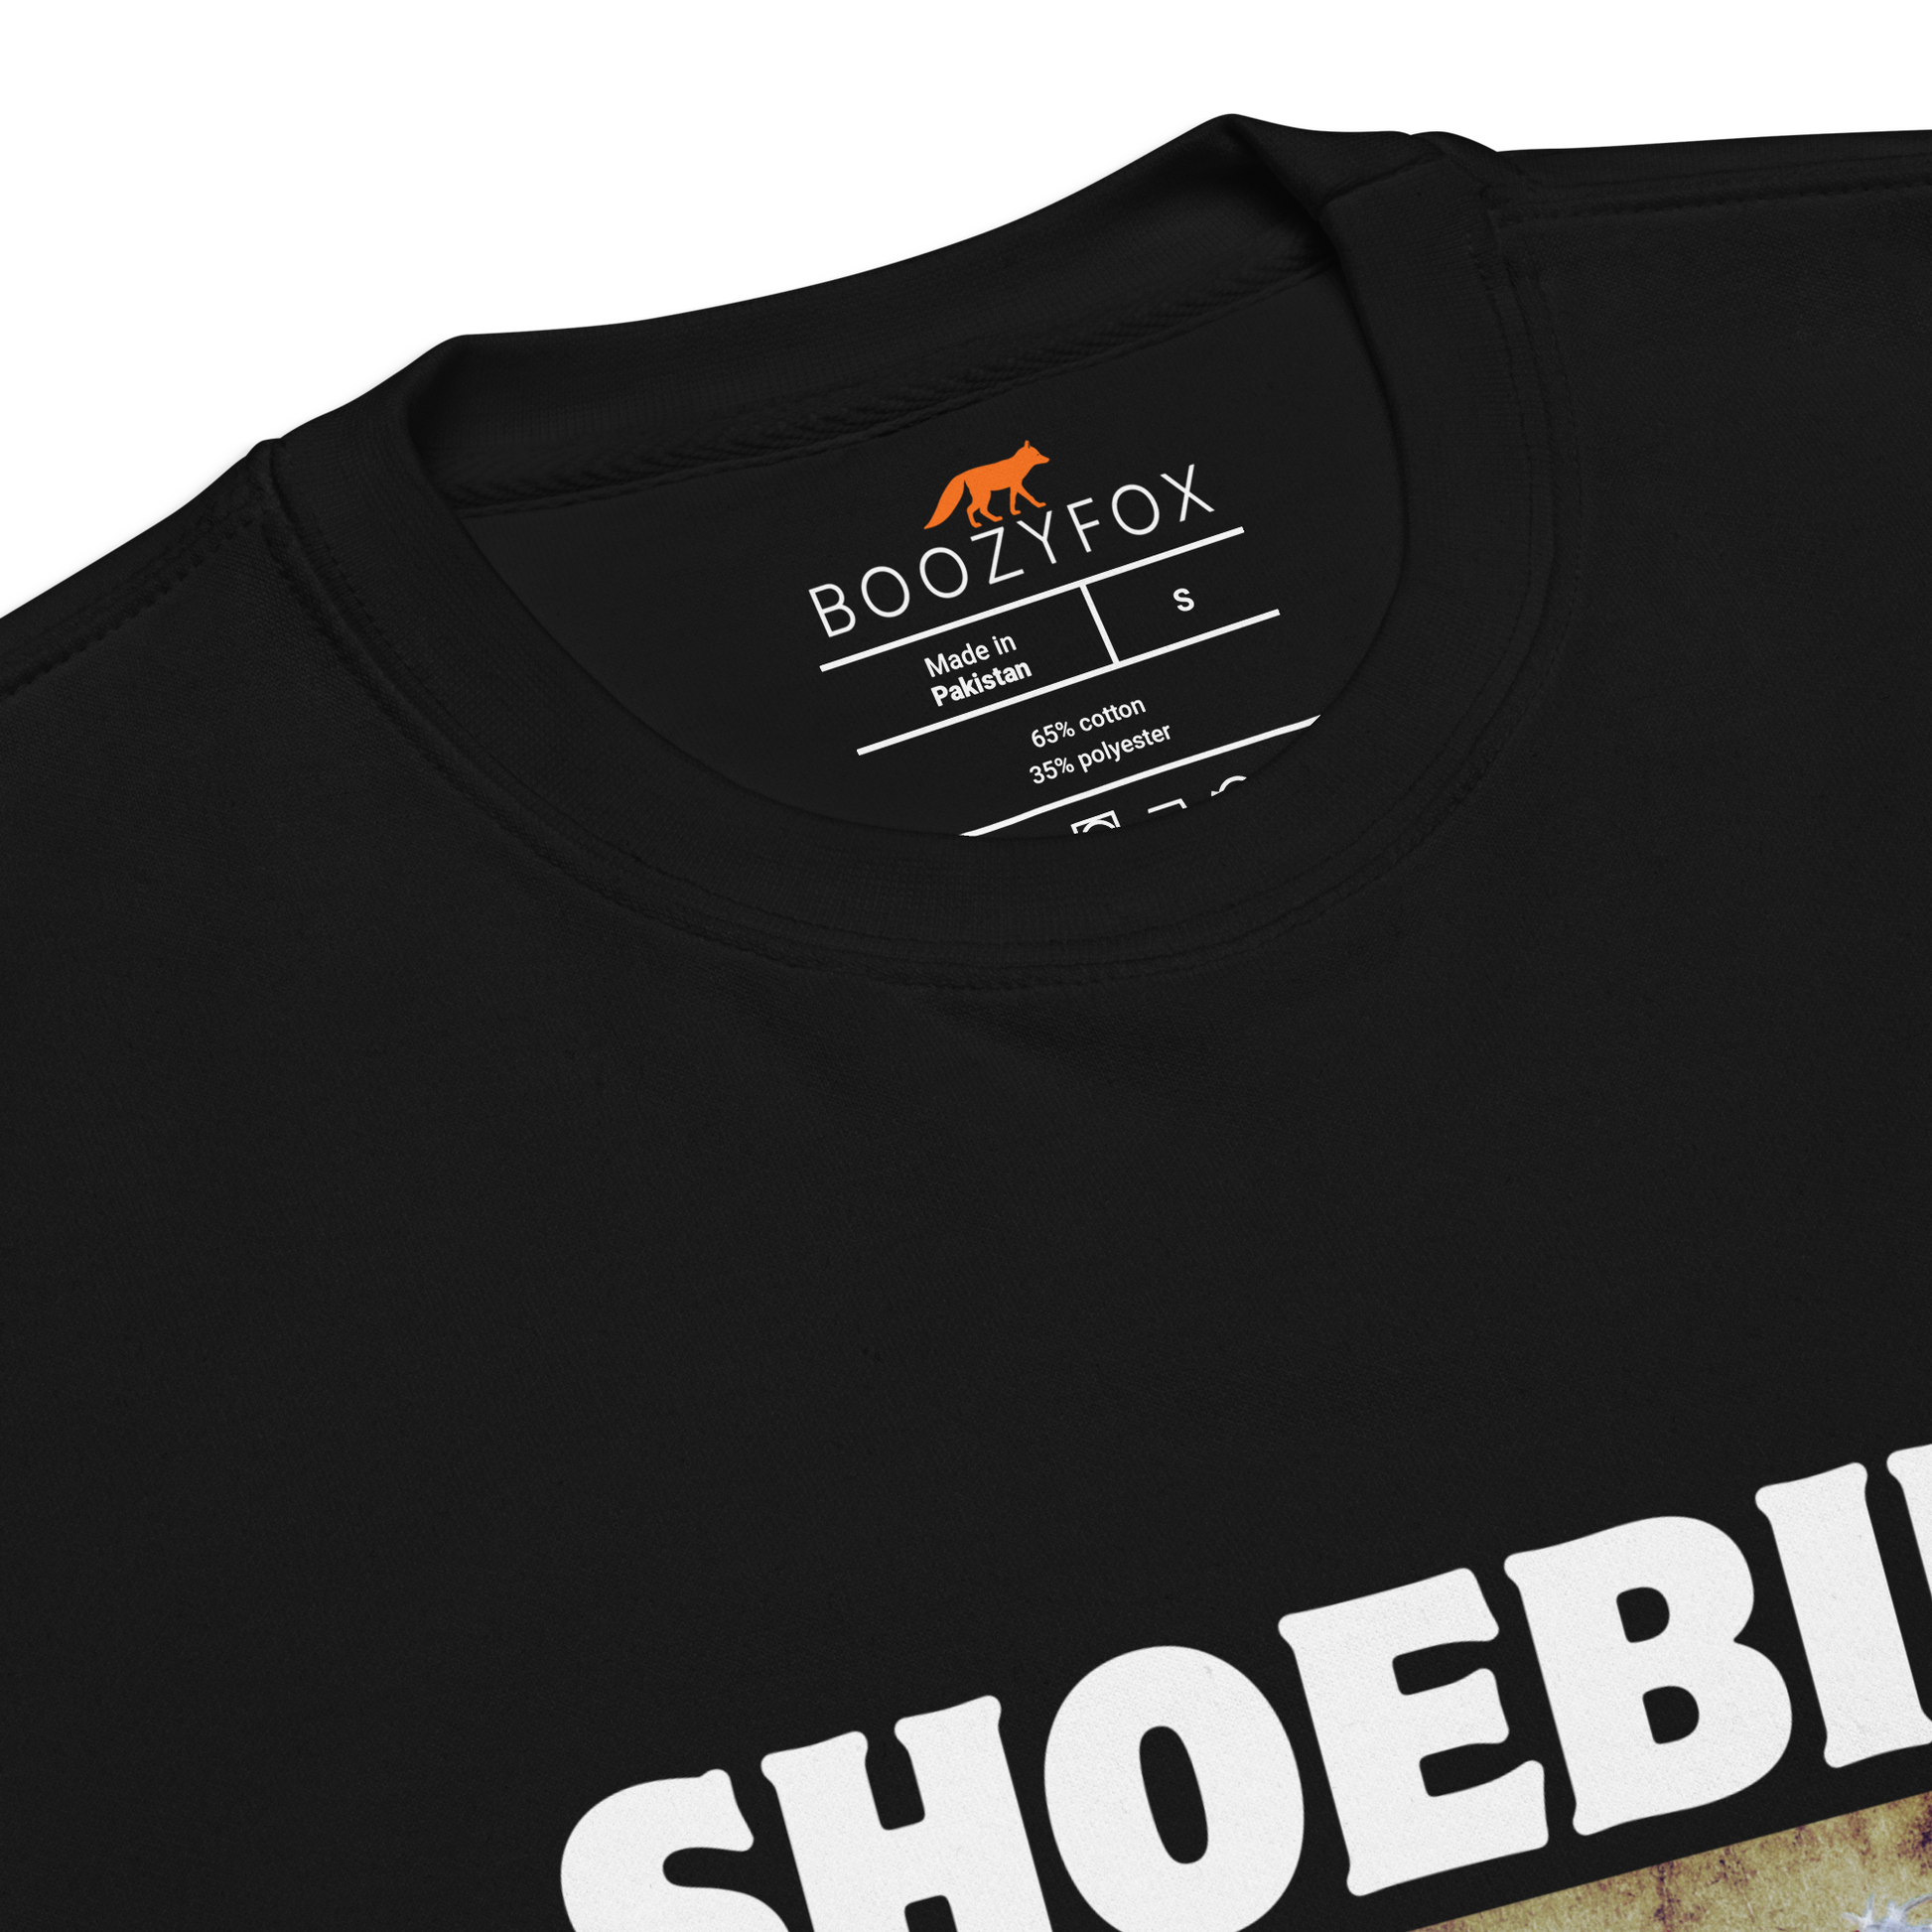 Product details of a Black Premium Shoebill Sweatshirt featuring a cool Shoebill graphic on the chest - Artsy/Funny Graphic Shoebill Stork Sweatshirts - Boozy Fox